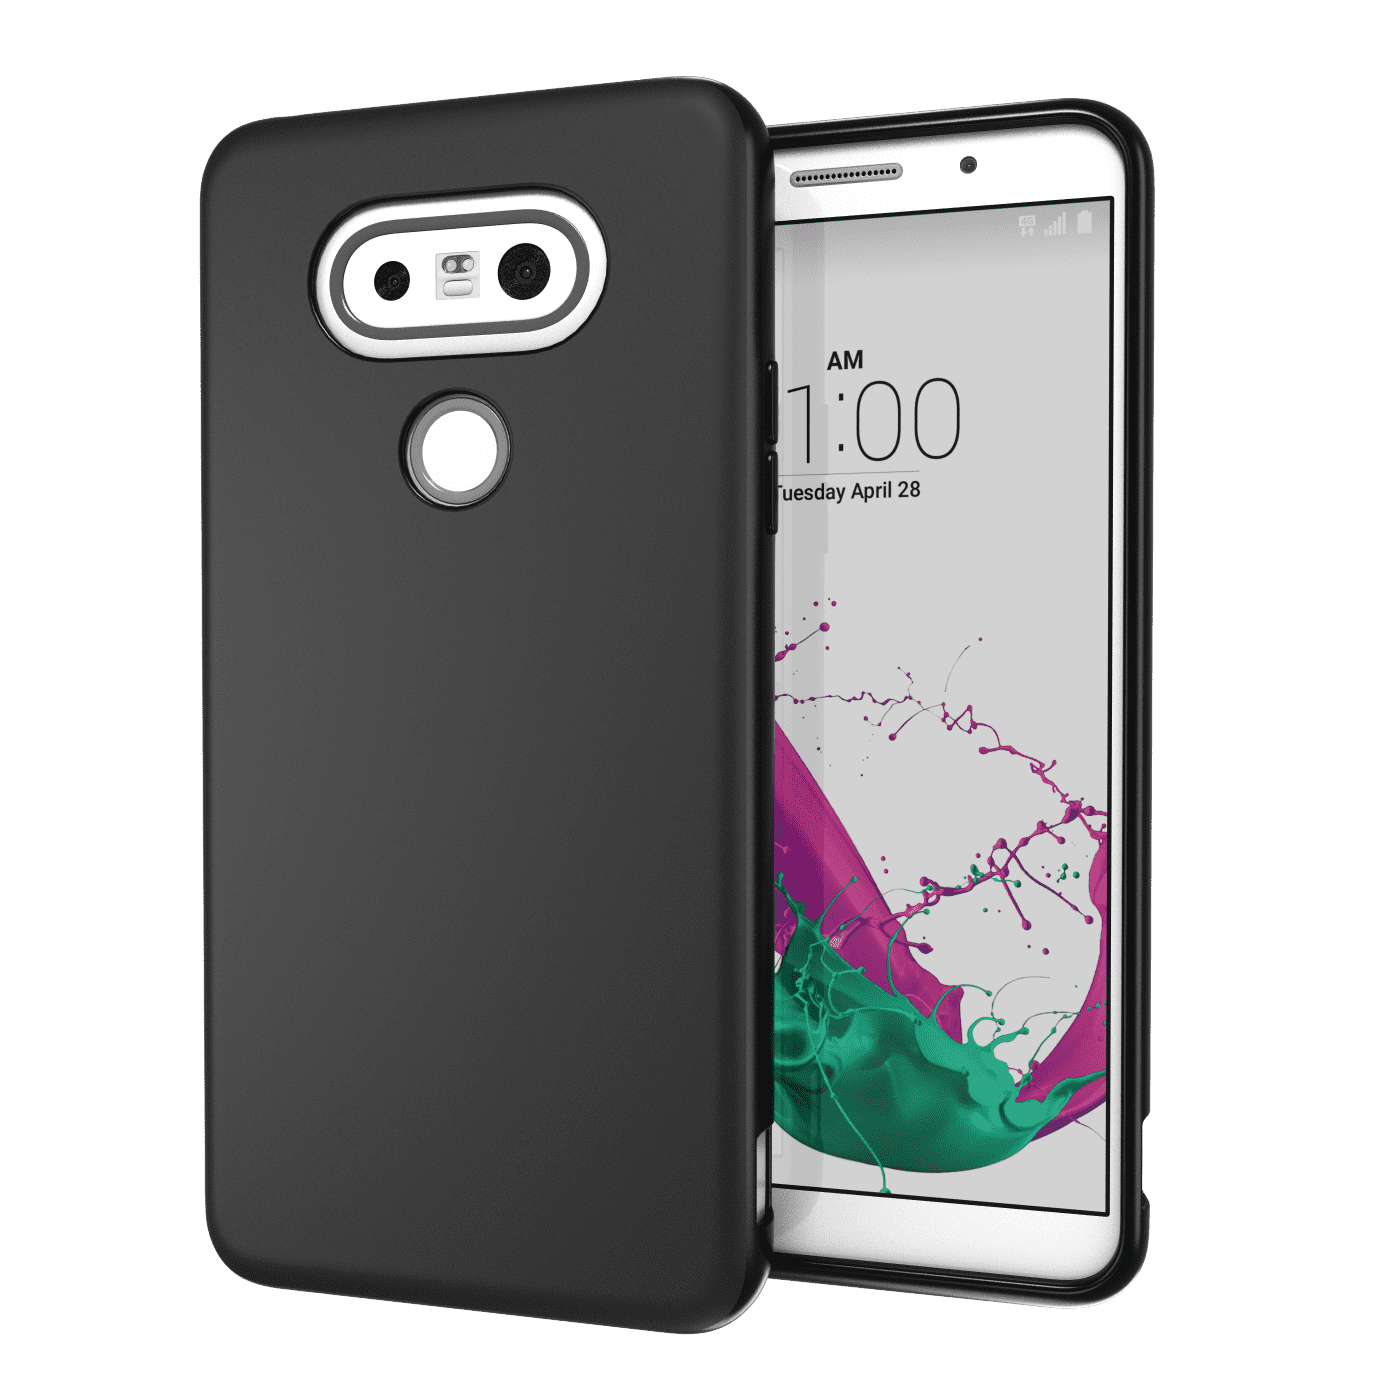 Clear TPU flexible phone case for LG G5